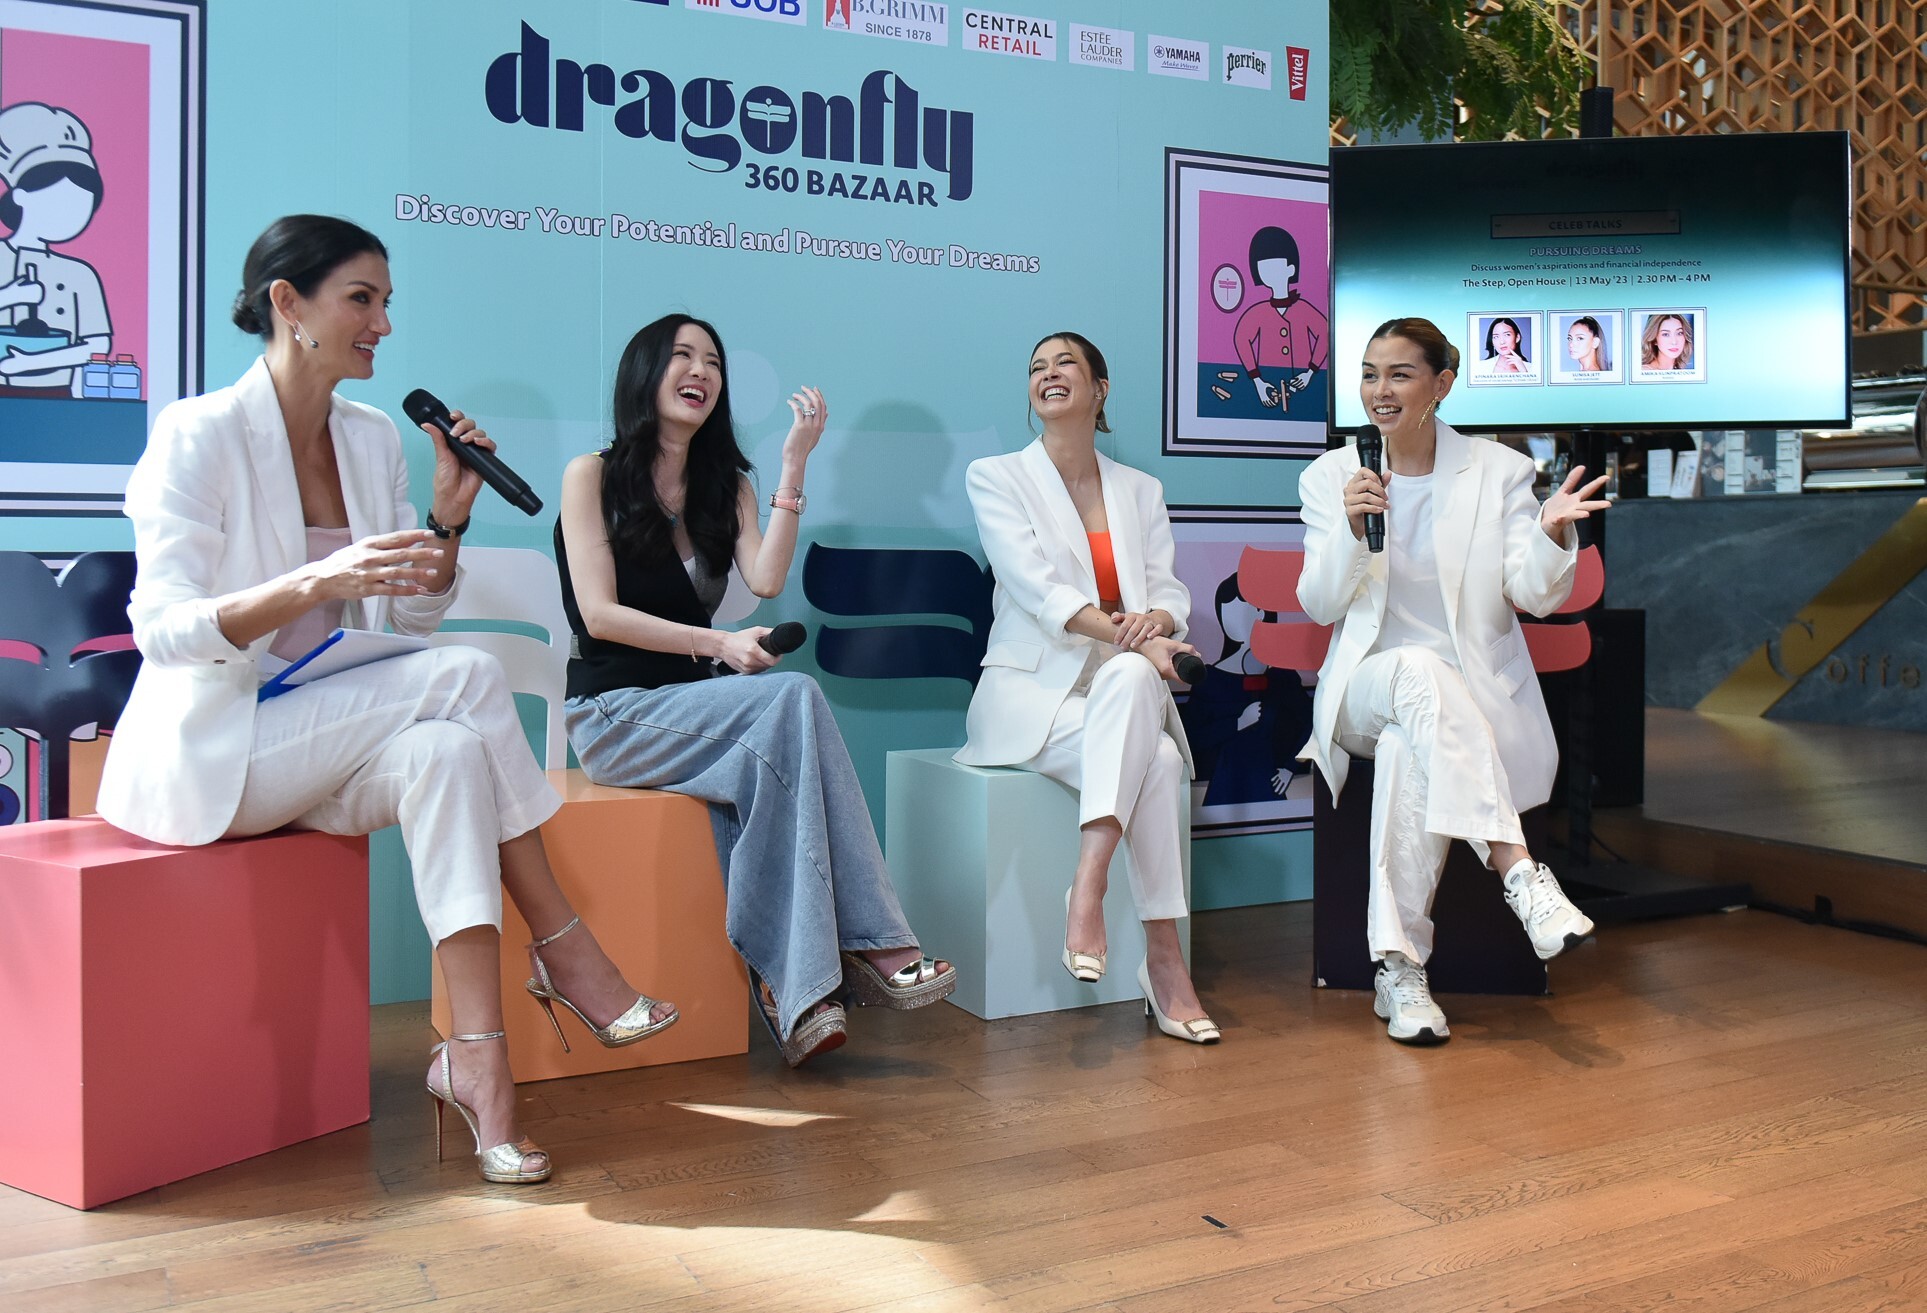 Dragonfly 360 ร่วมค้นพบศักยภาพและตามล่าหาความฝันผู้หญิงไทย ใน "Dragonfly360 Bazaar 2023"